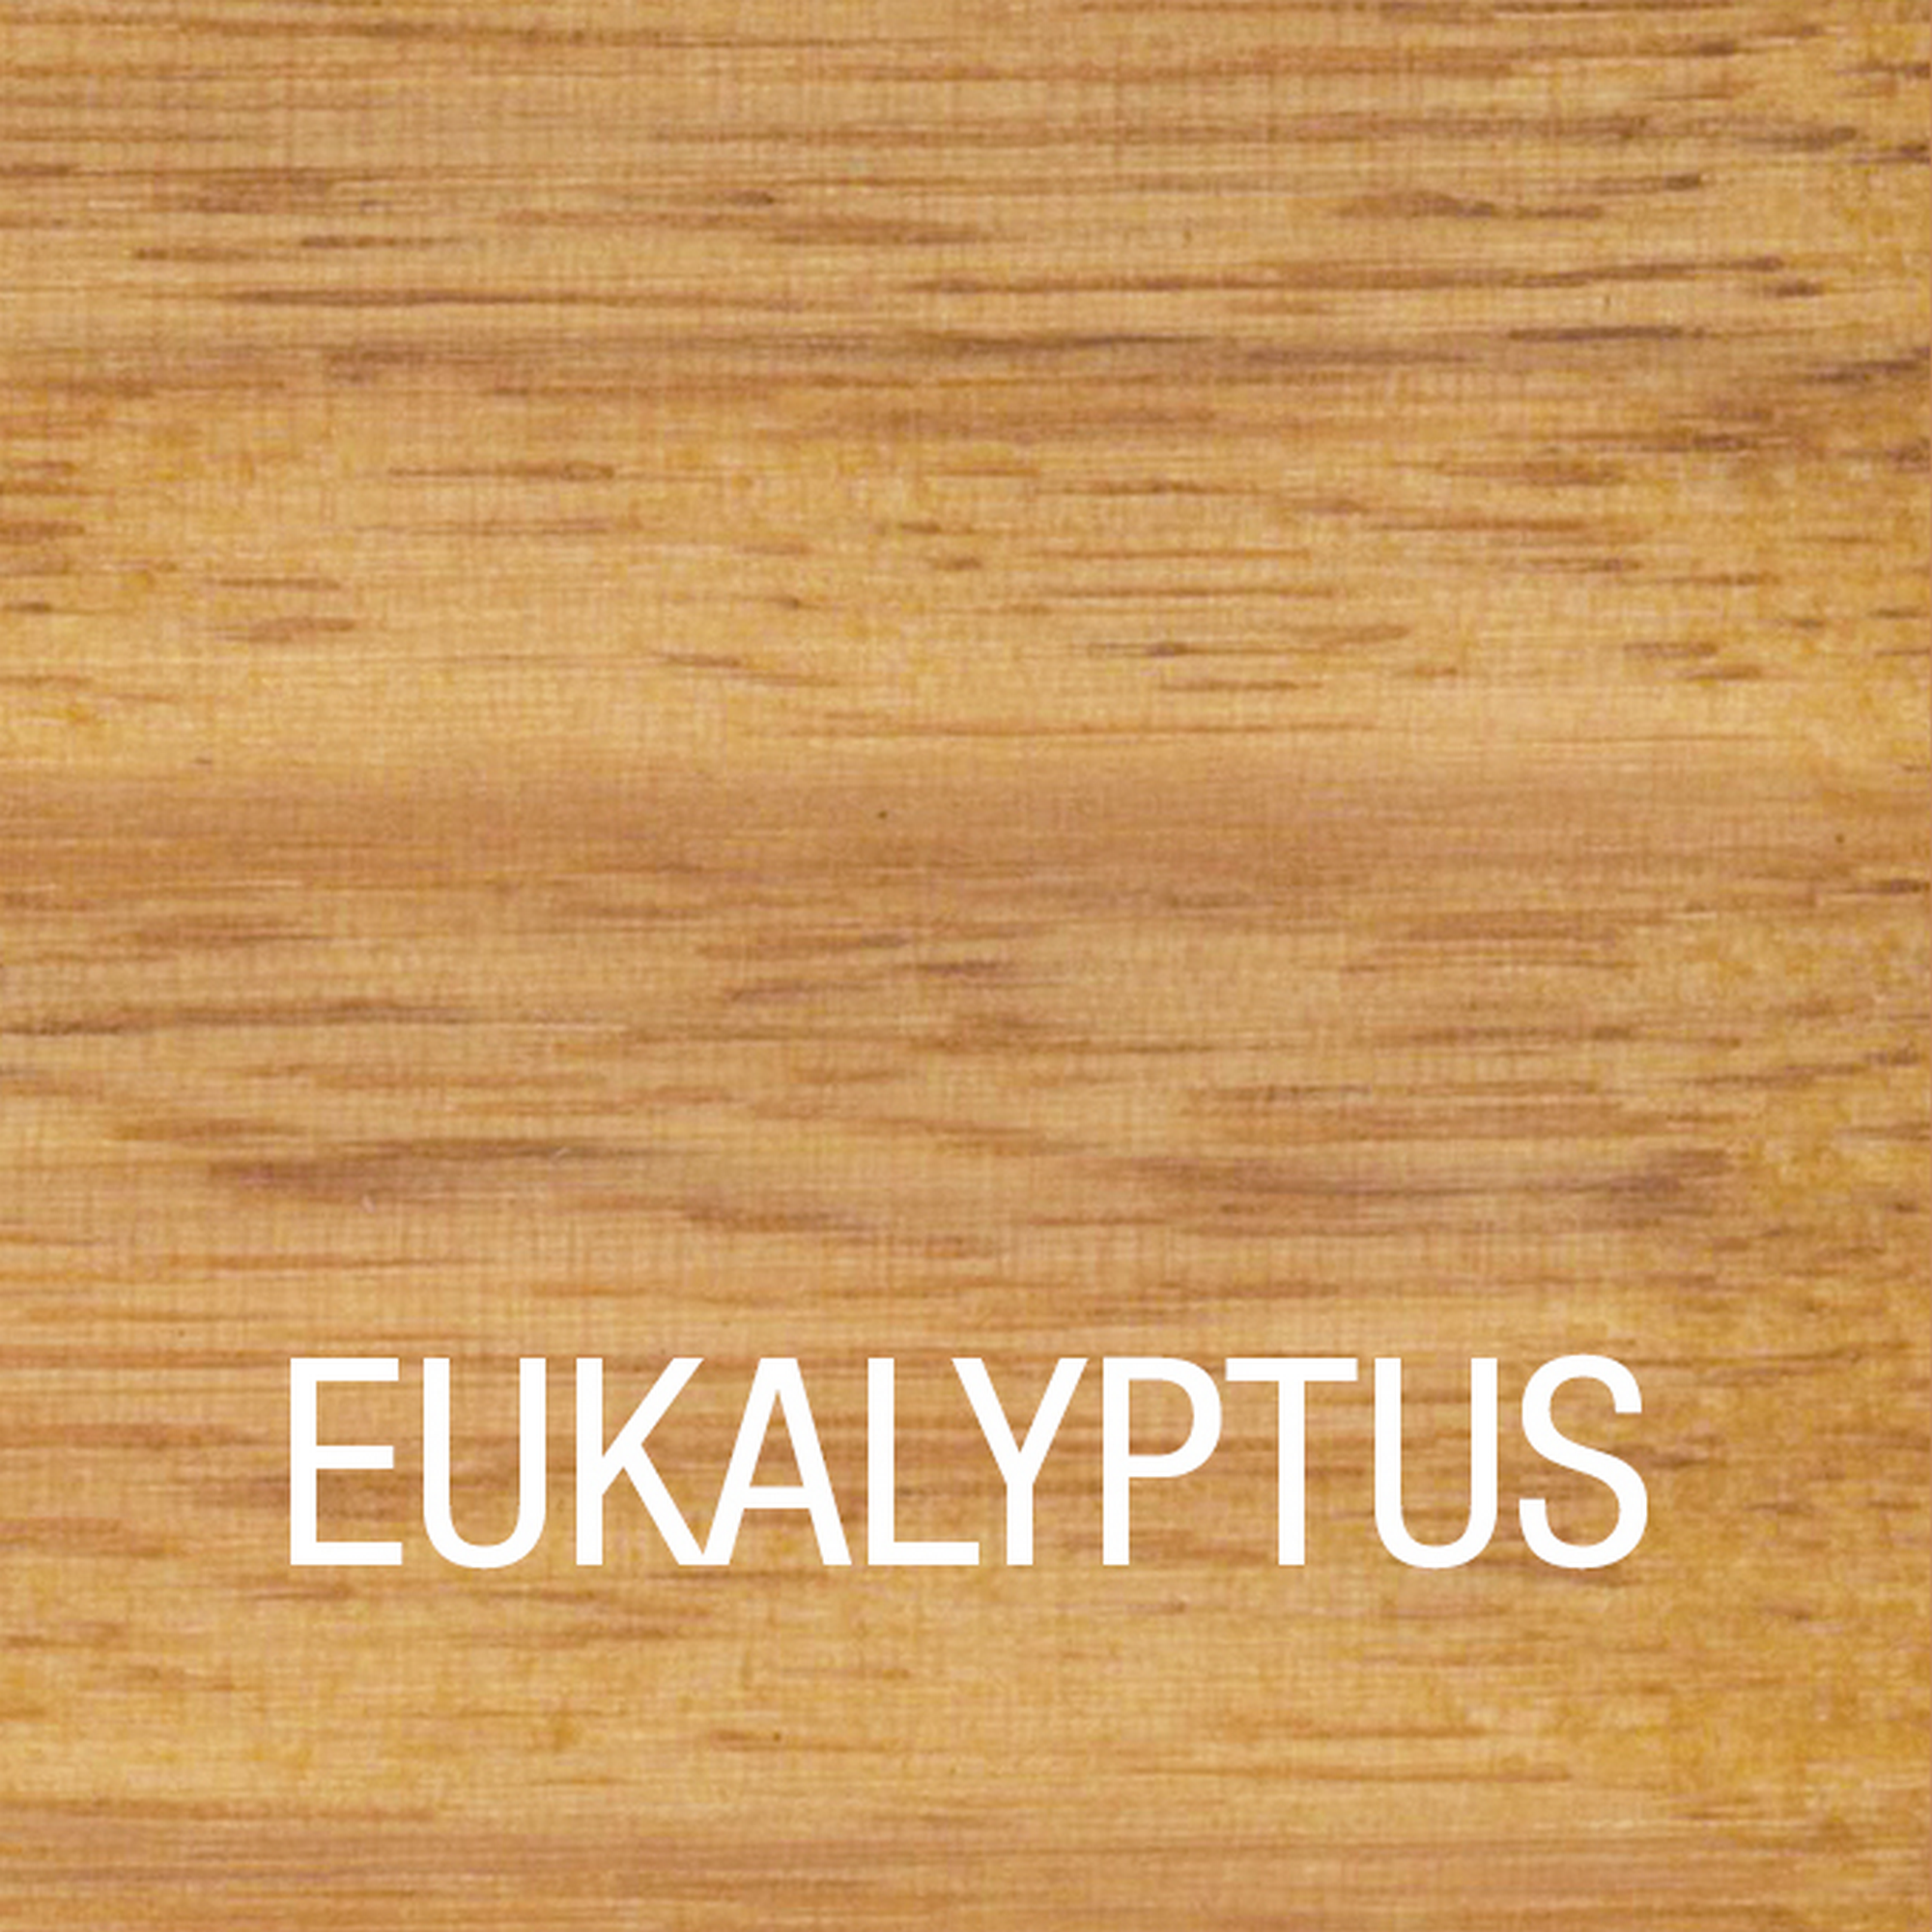 Holzöl eukalyptus 750 ml + product picture